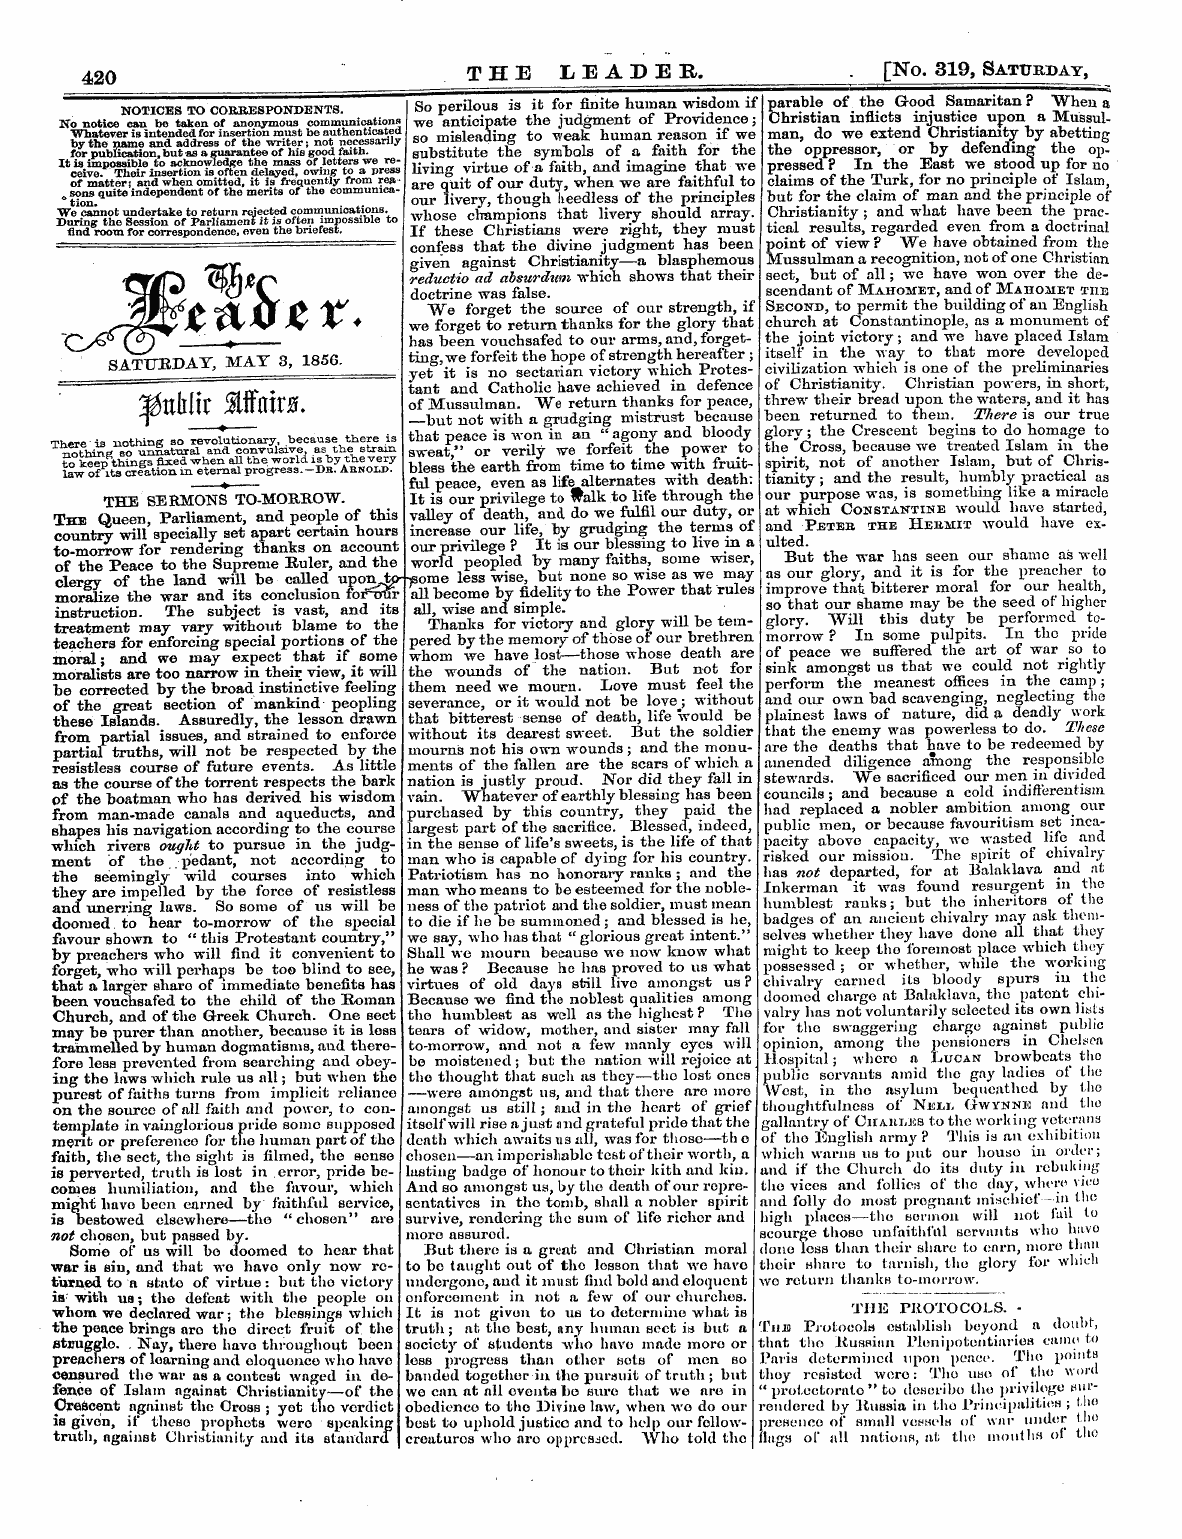 Leader (1850-1860): jS F Y, 2nd edition - Notices To Correspondents. No Notice Can...